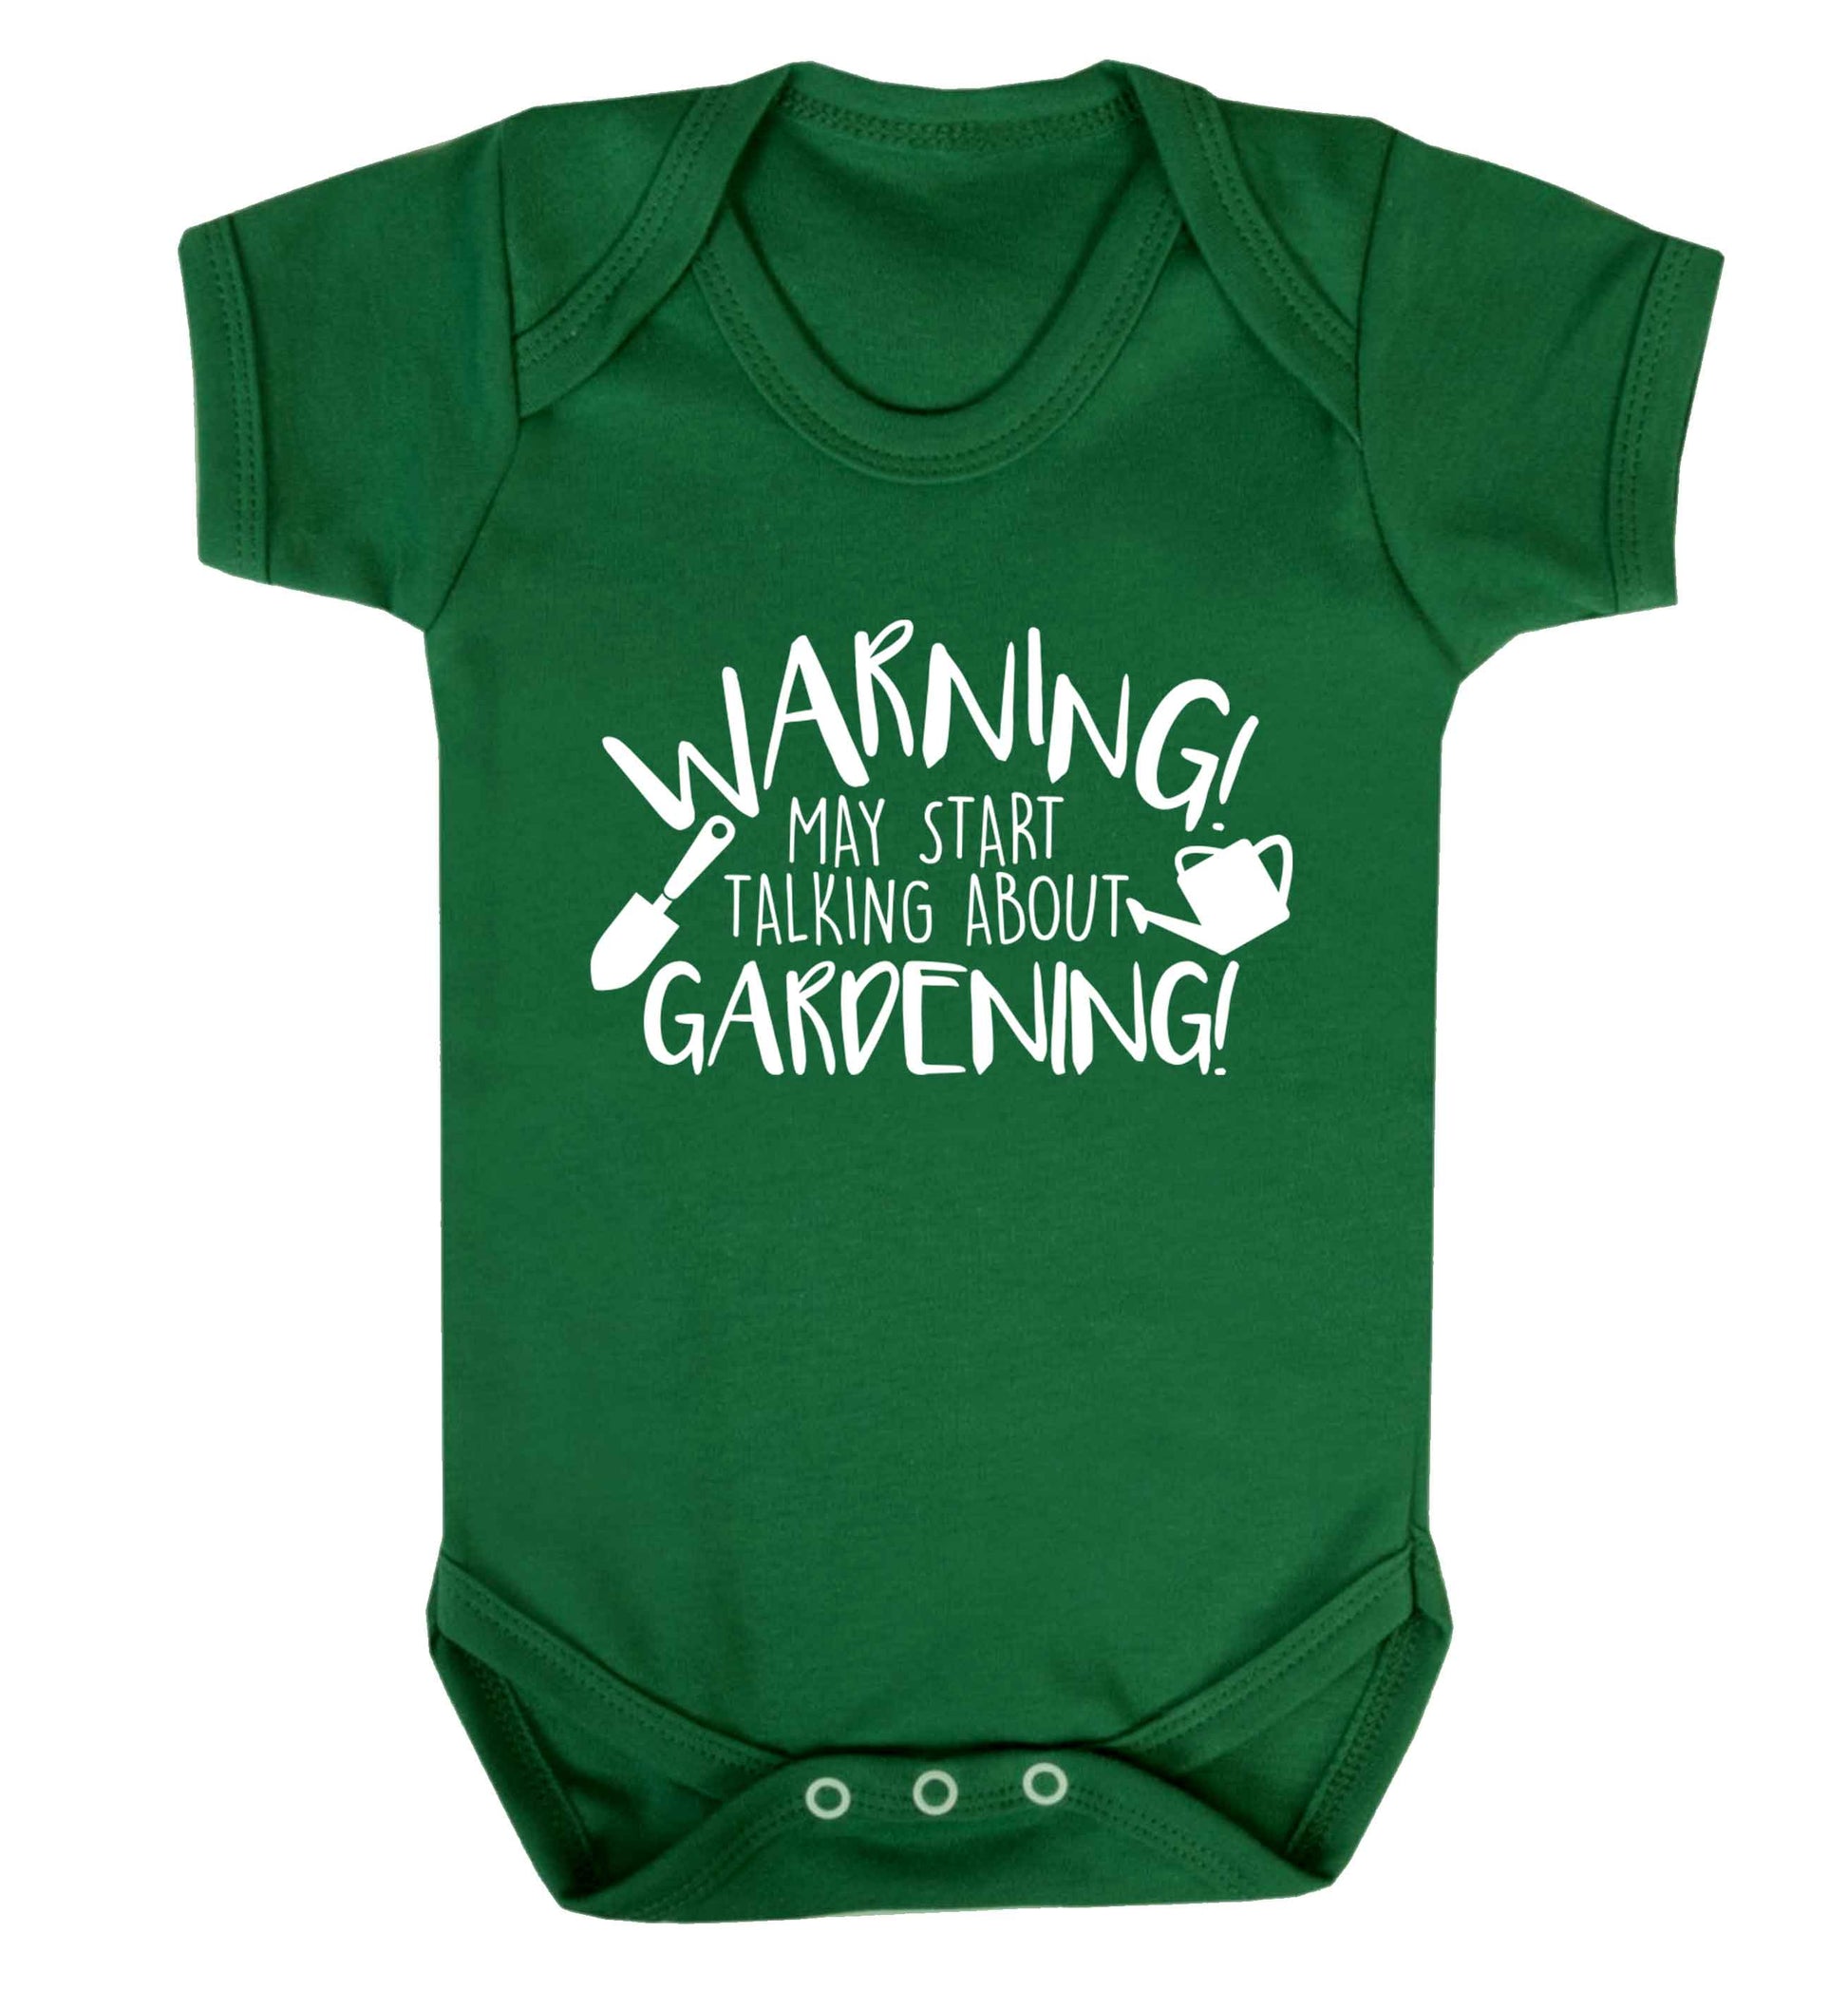 Warning may start talking about gardening Baby Vest green 18-24 months